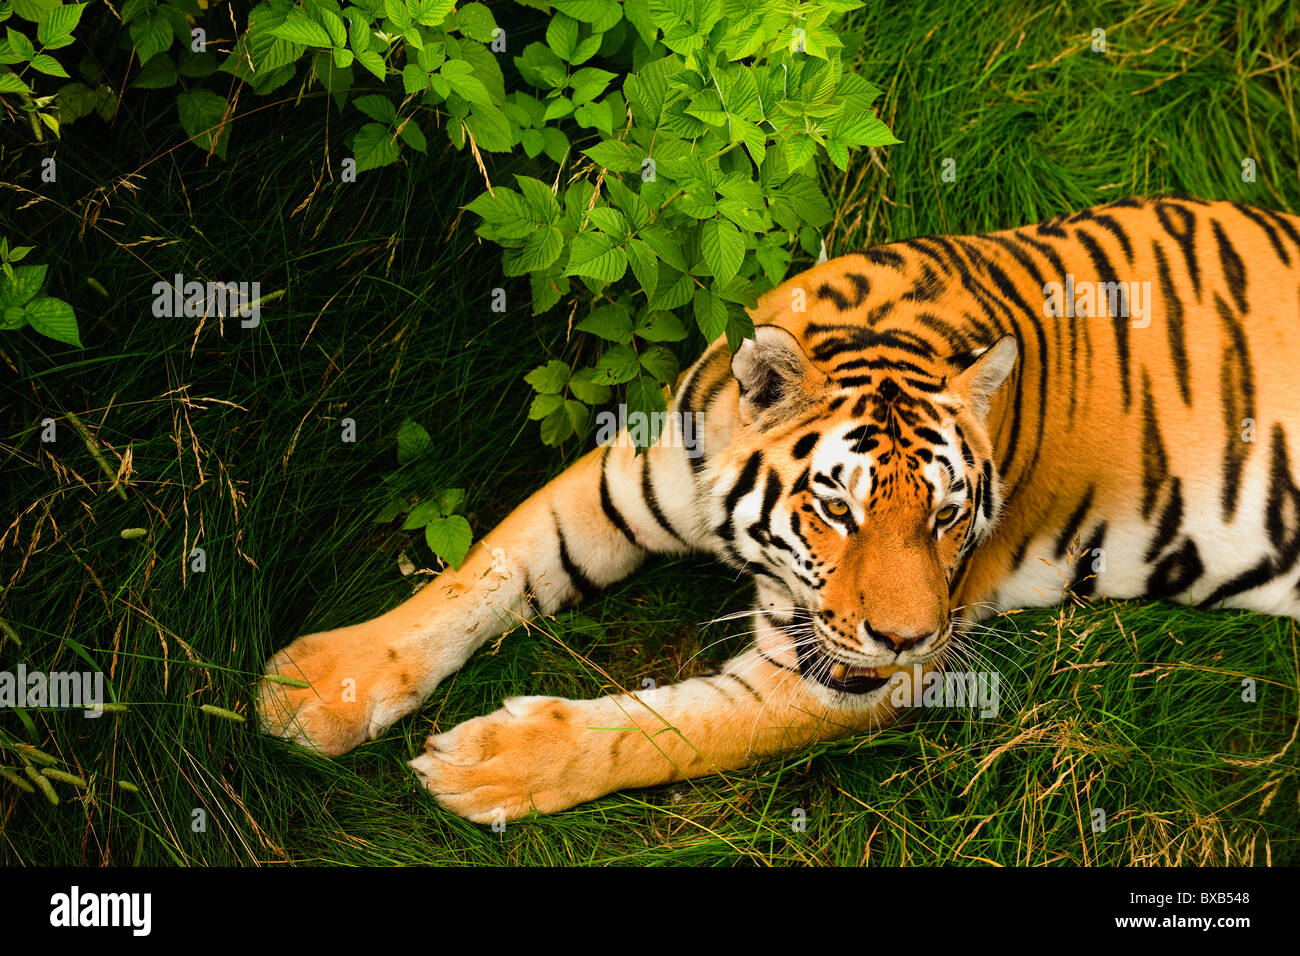 Tiger lying on grass Stock Photo